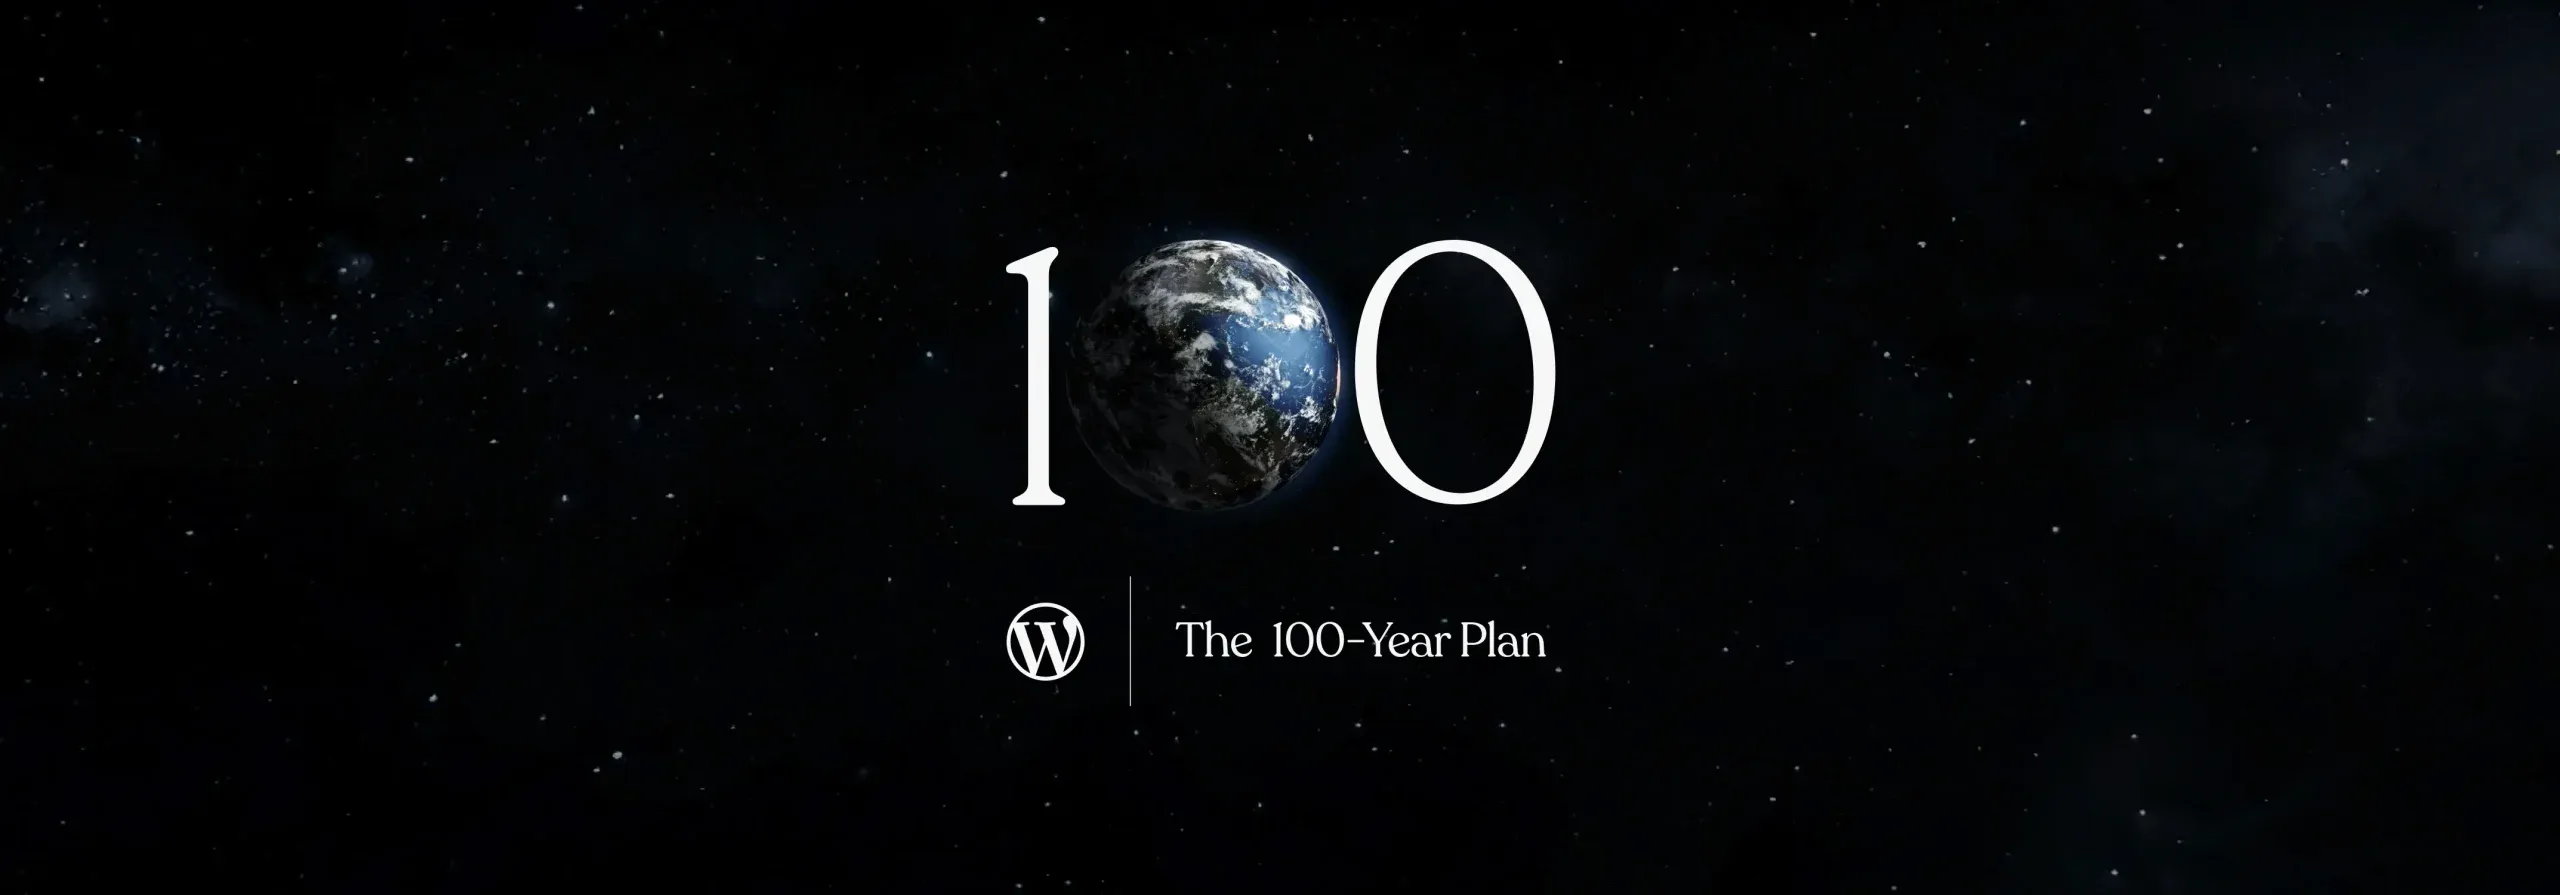 WordPress 官宣推出 “百年计划”